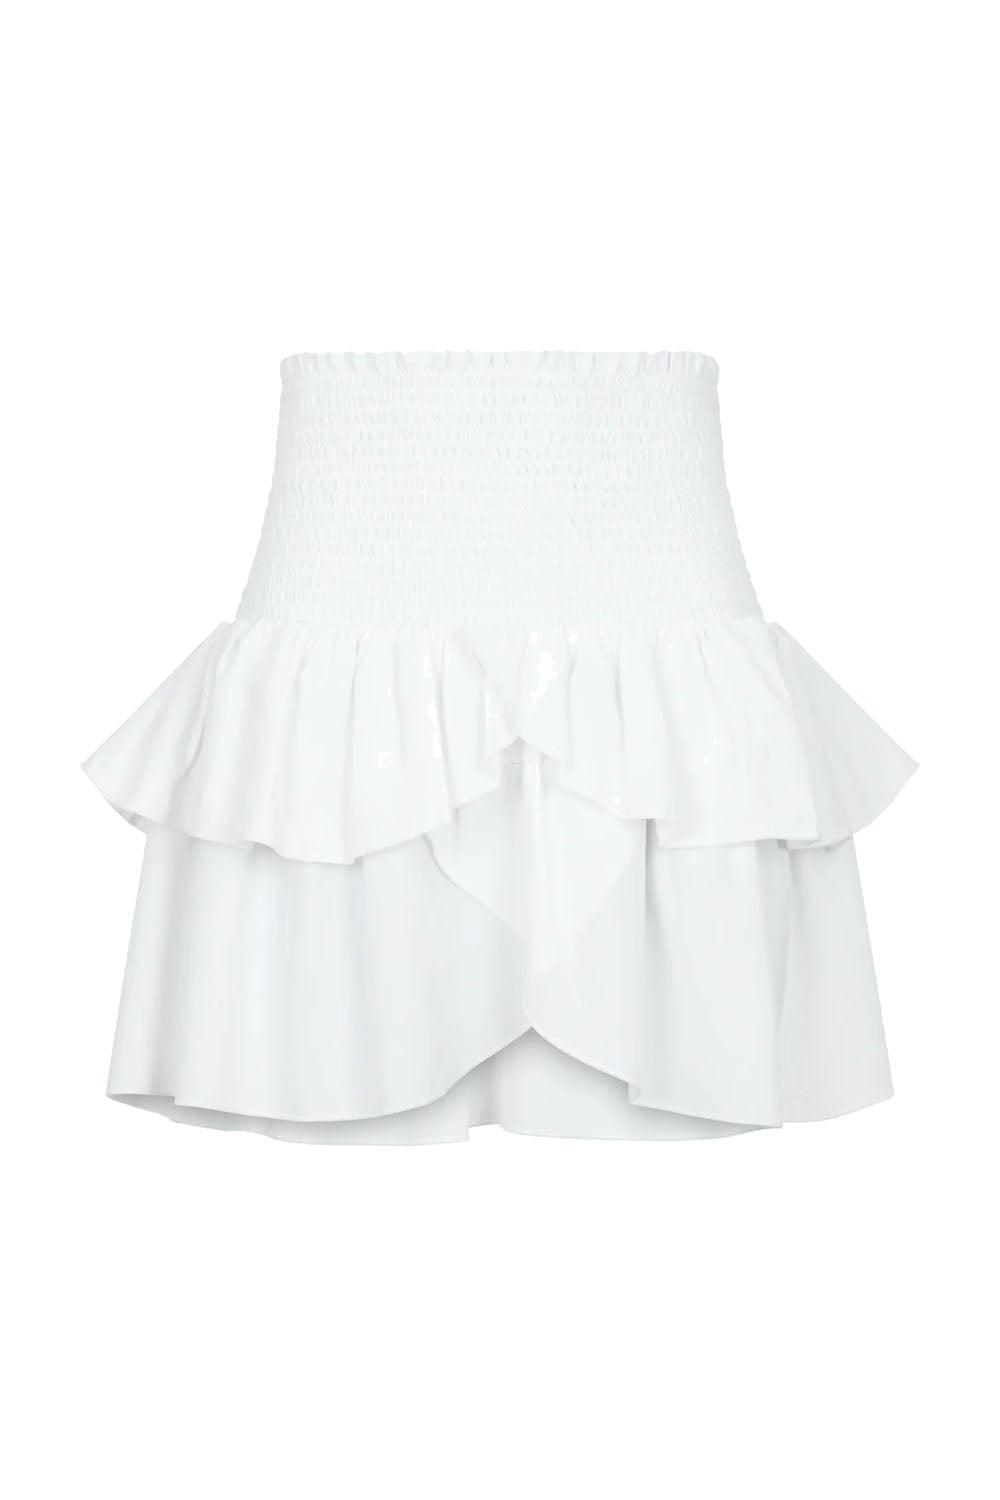 Carin R Skirt White